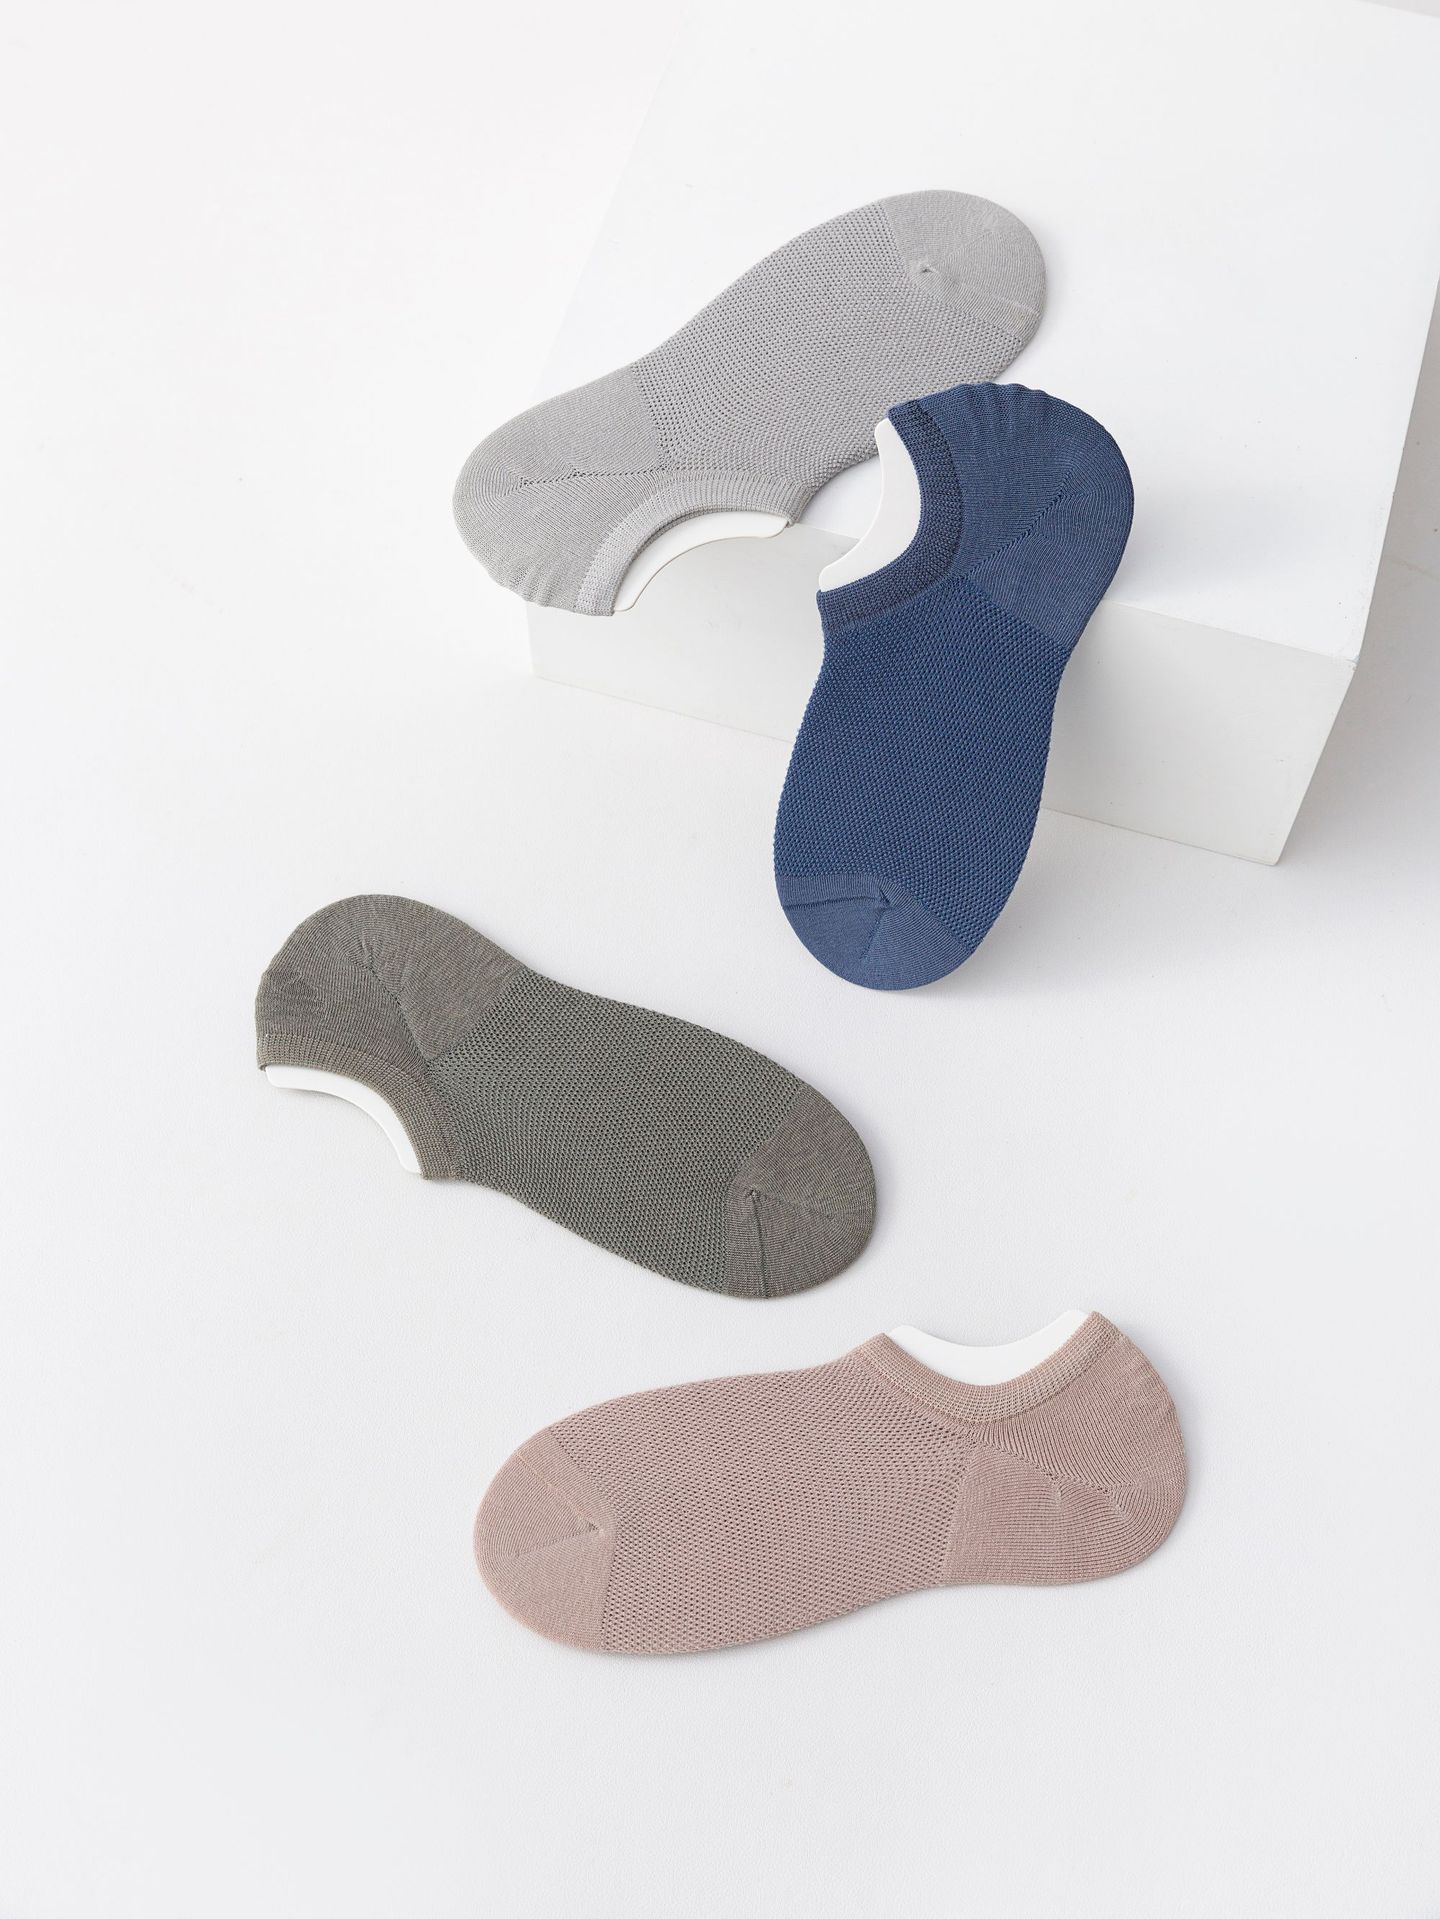 Socks Men's Shallow Mouth Invisible Cotton Socks Mesh Non-Slip Silicone Boneless Breathable